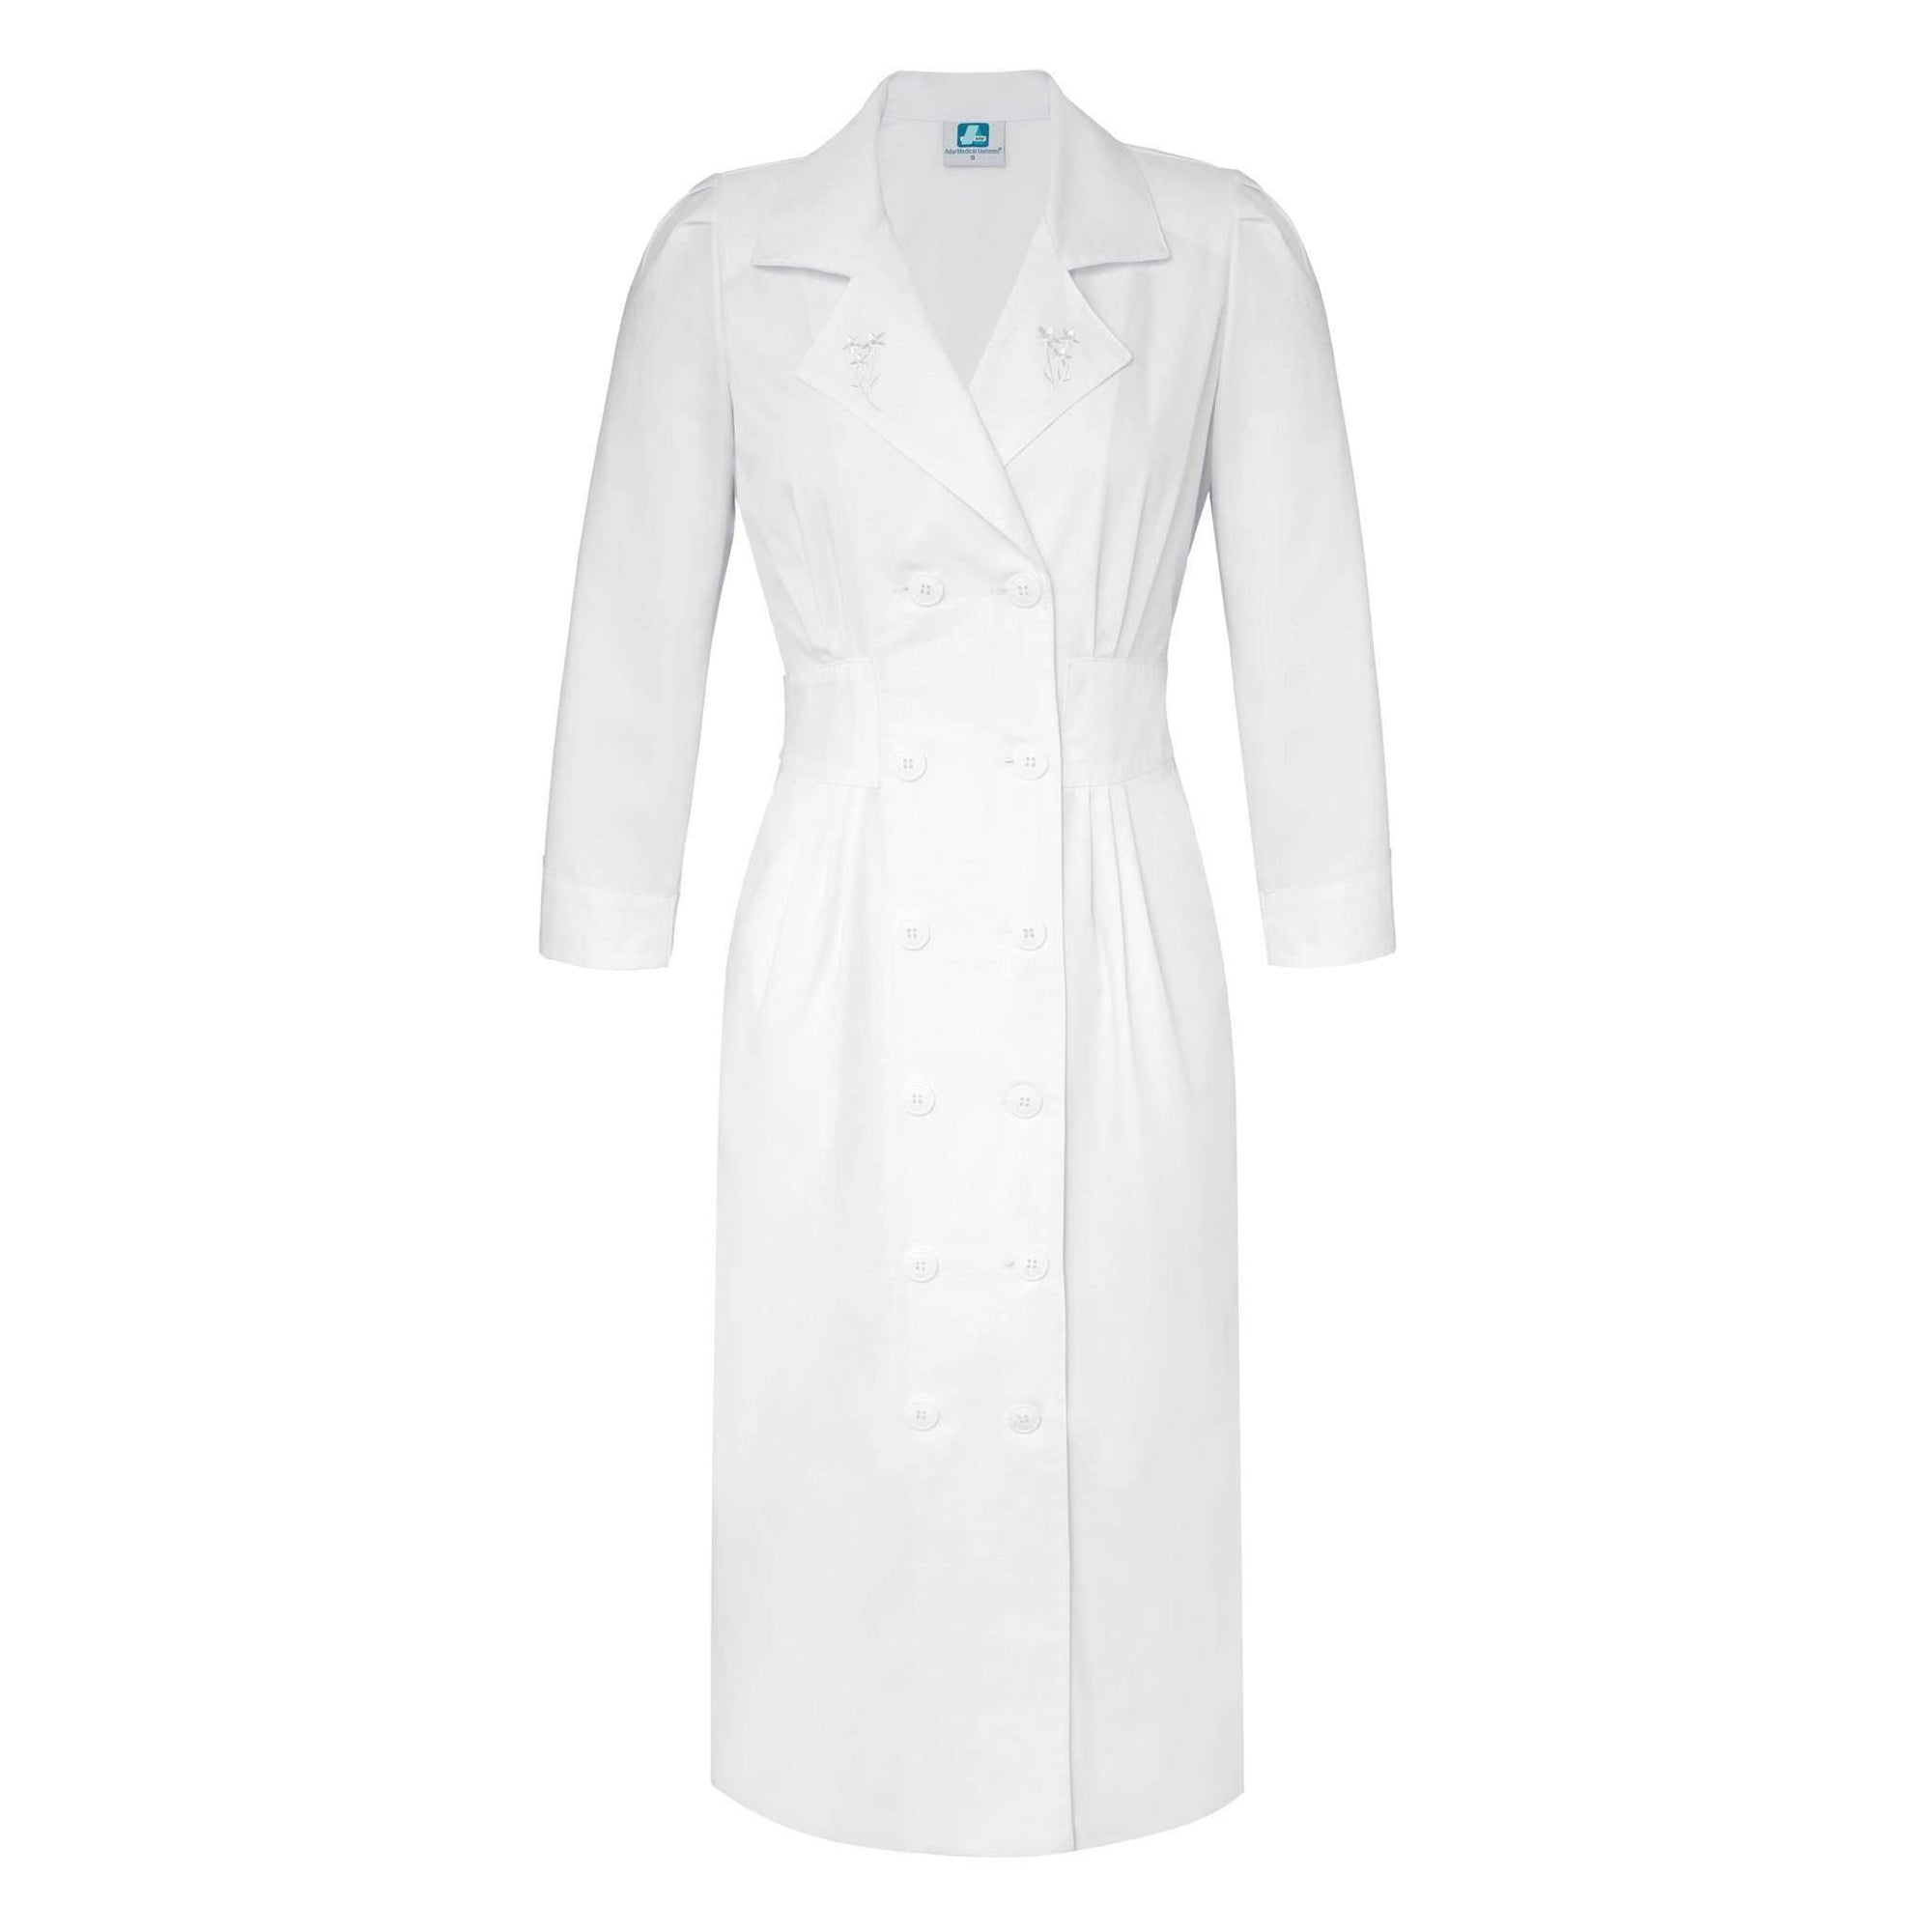  Adar - uniforms Medical Uniform Dresses uniforms online Adar Universal Tuck Pleat Midriff Dress - SchoolUniforms.com